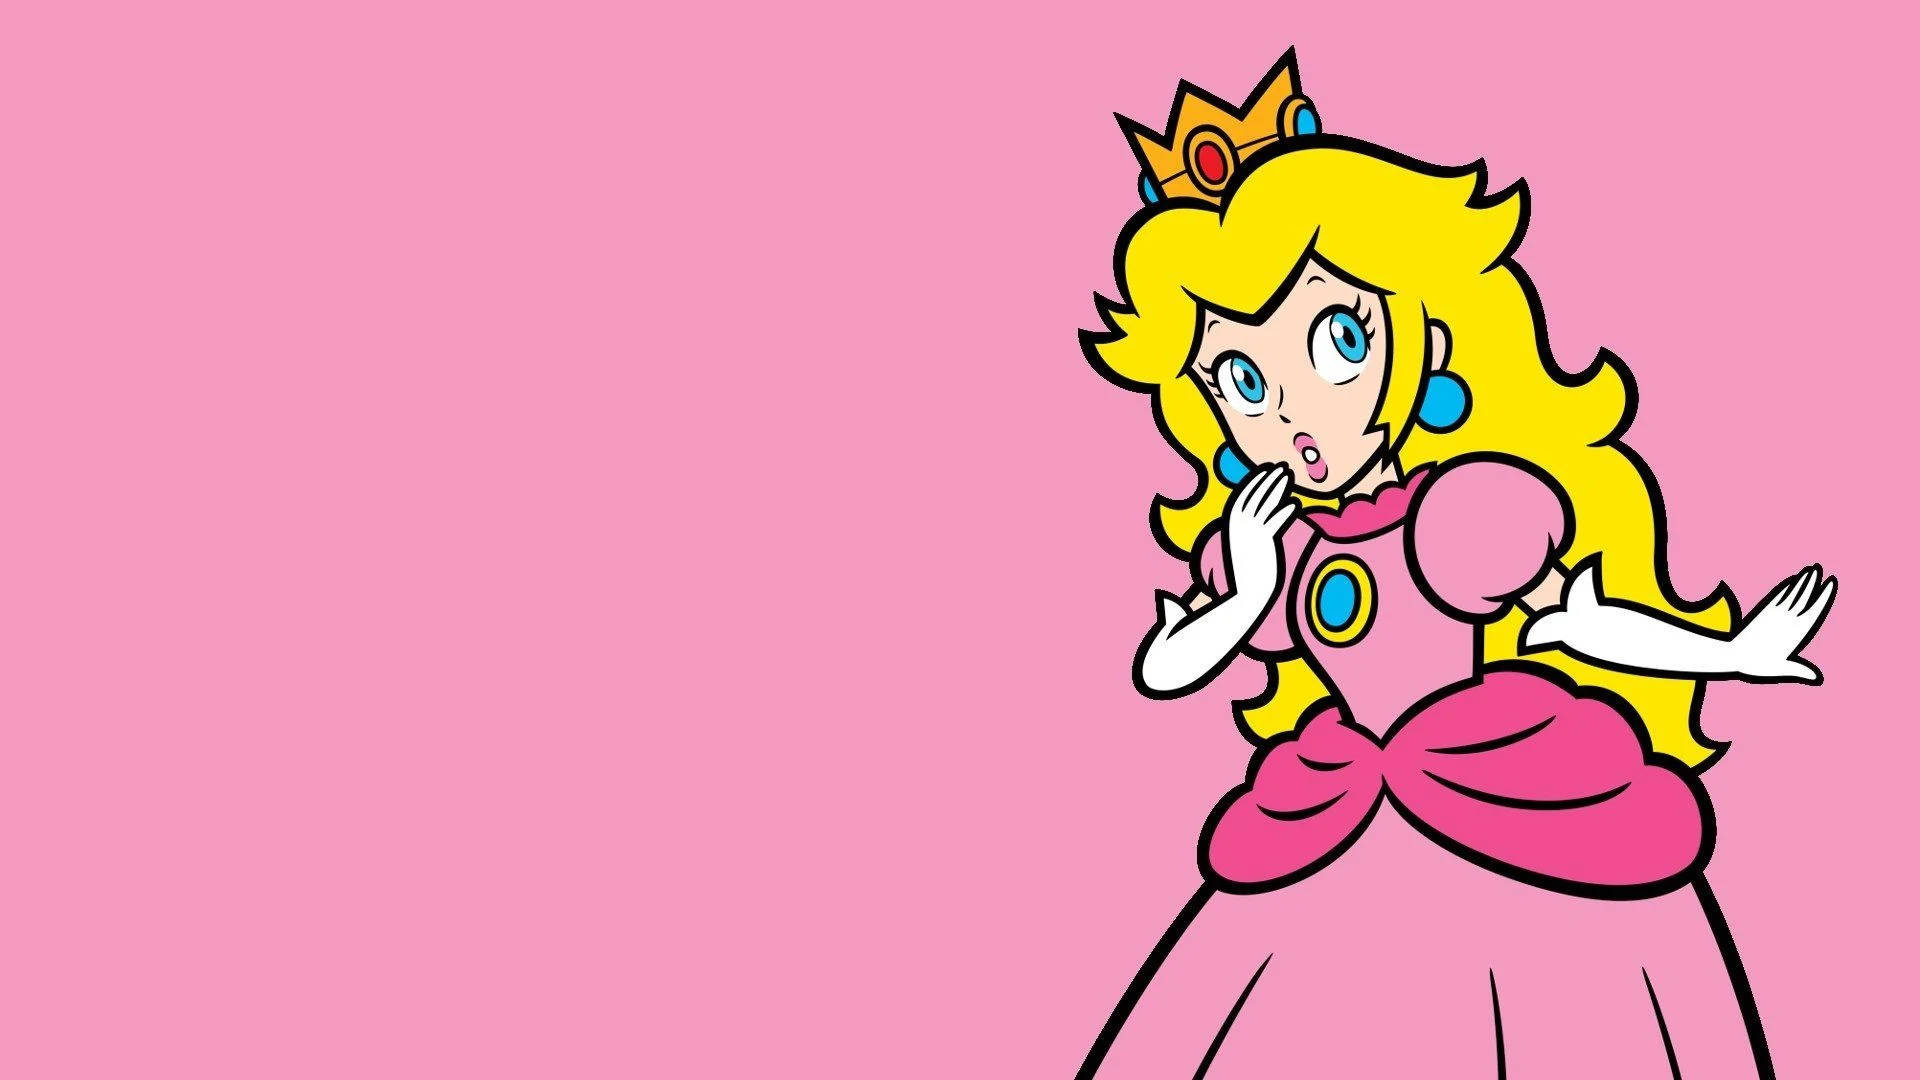 Princess Peach Nintendo Character Vector Art